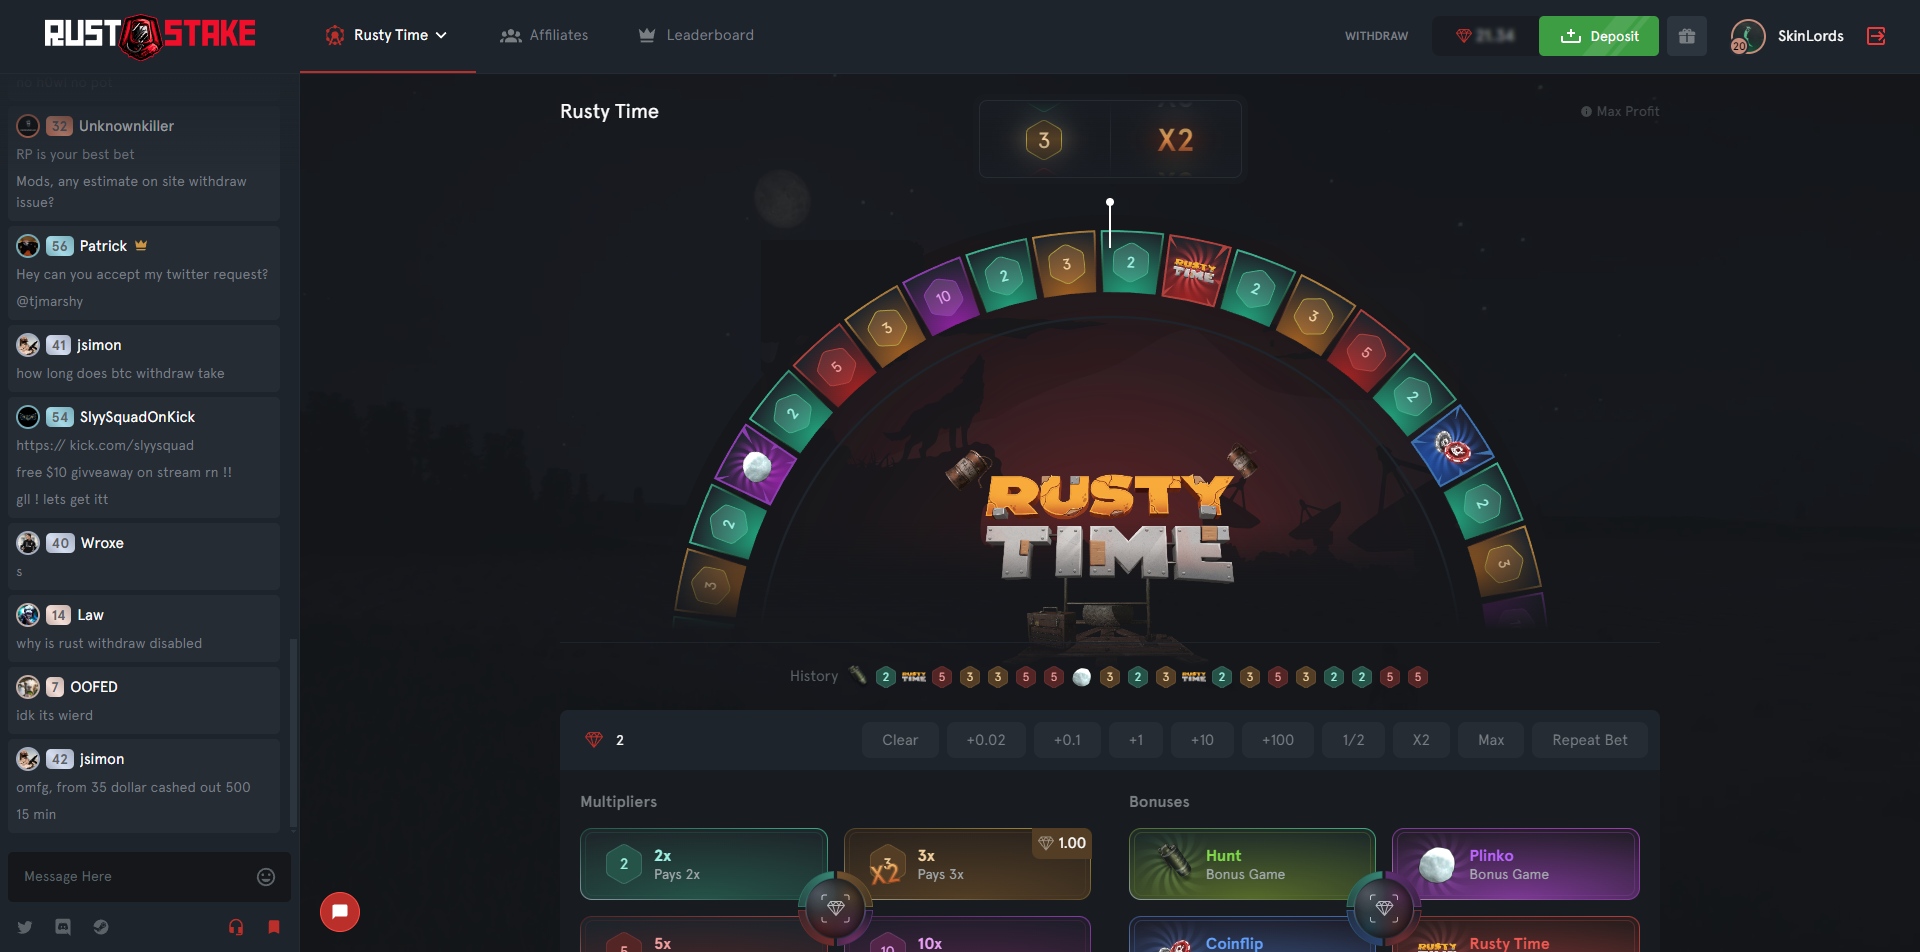 RustStake Original Game Rusty Time